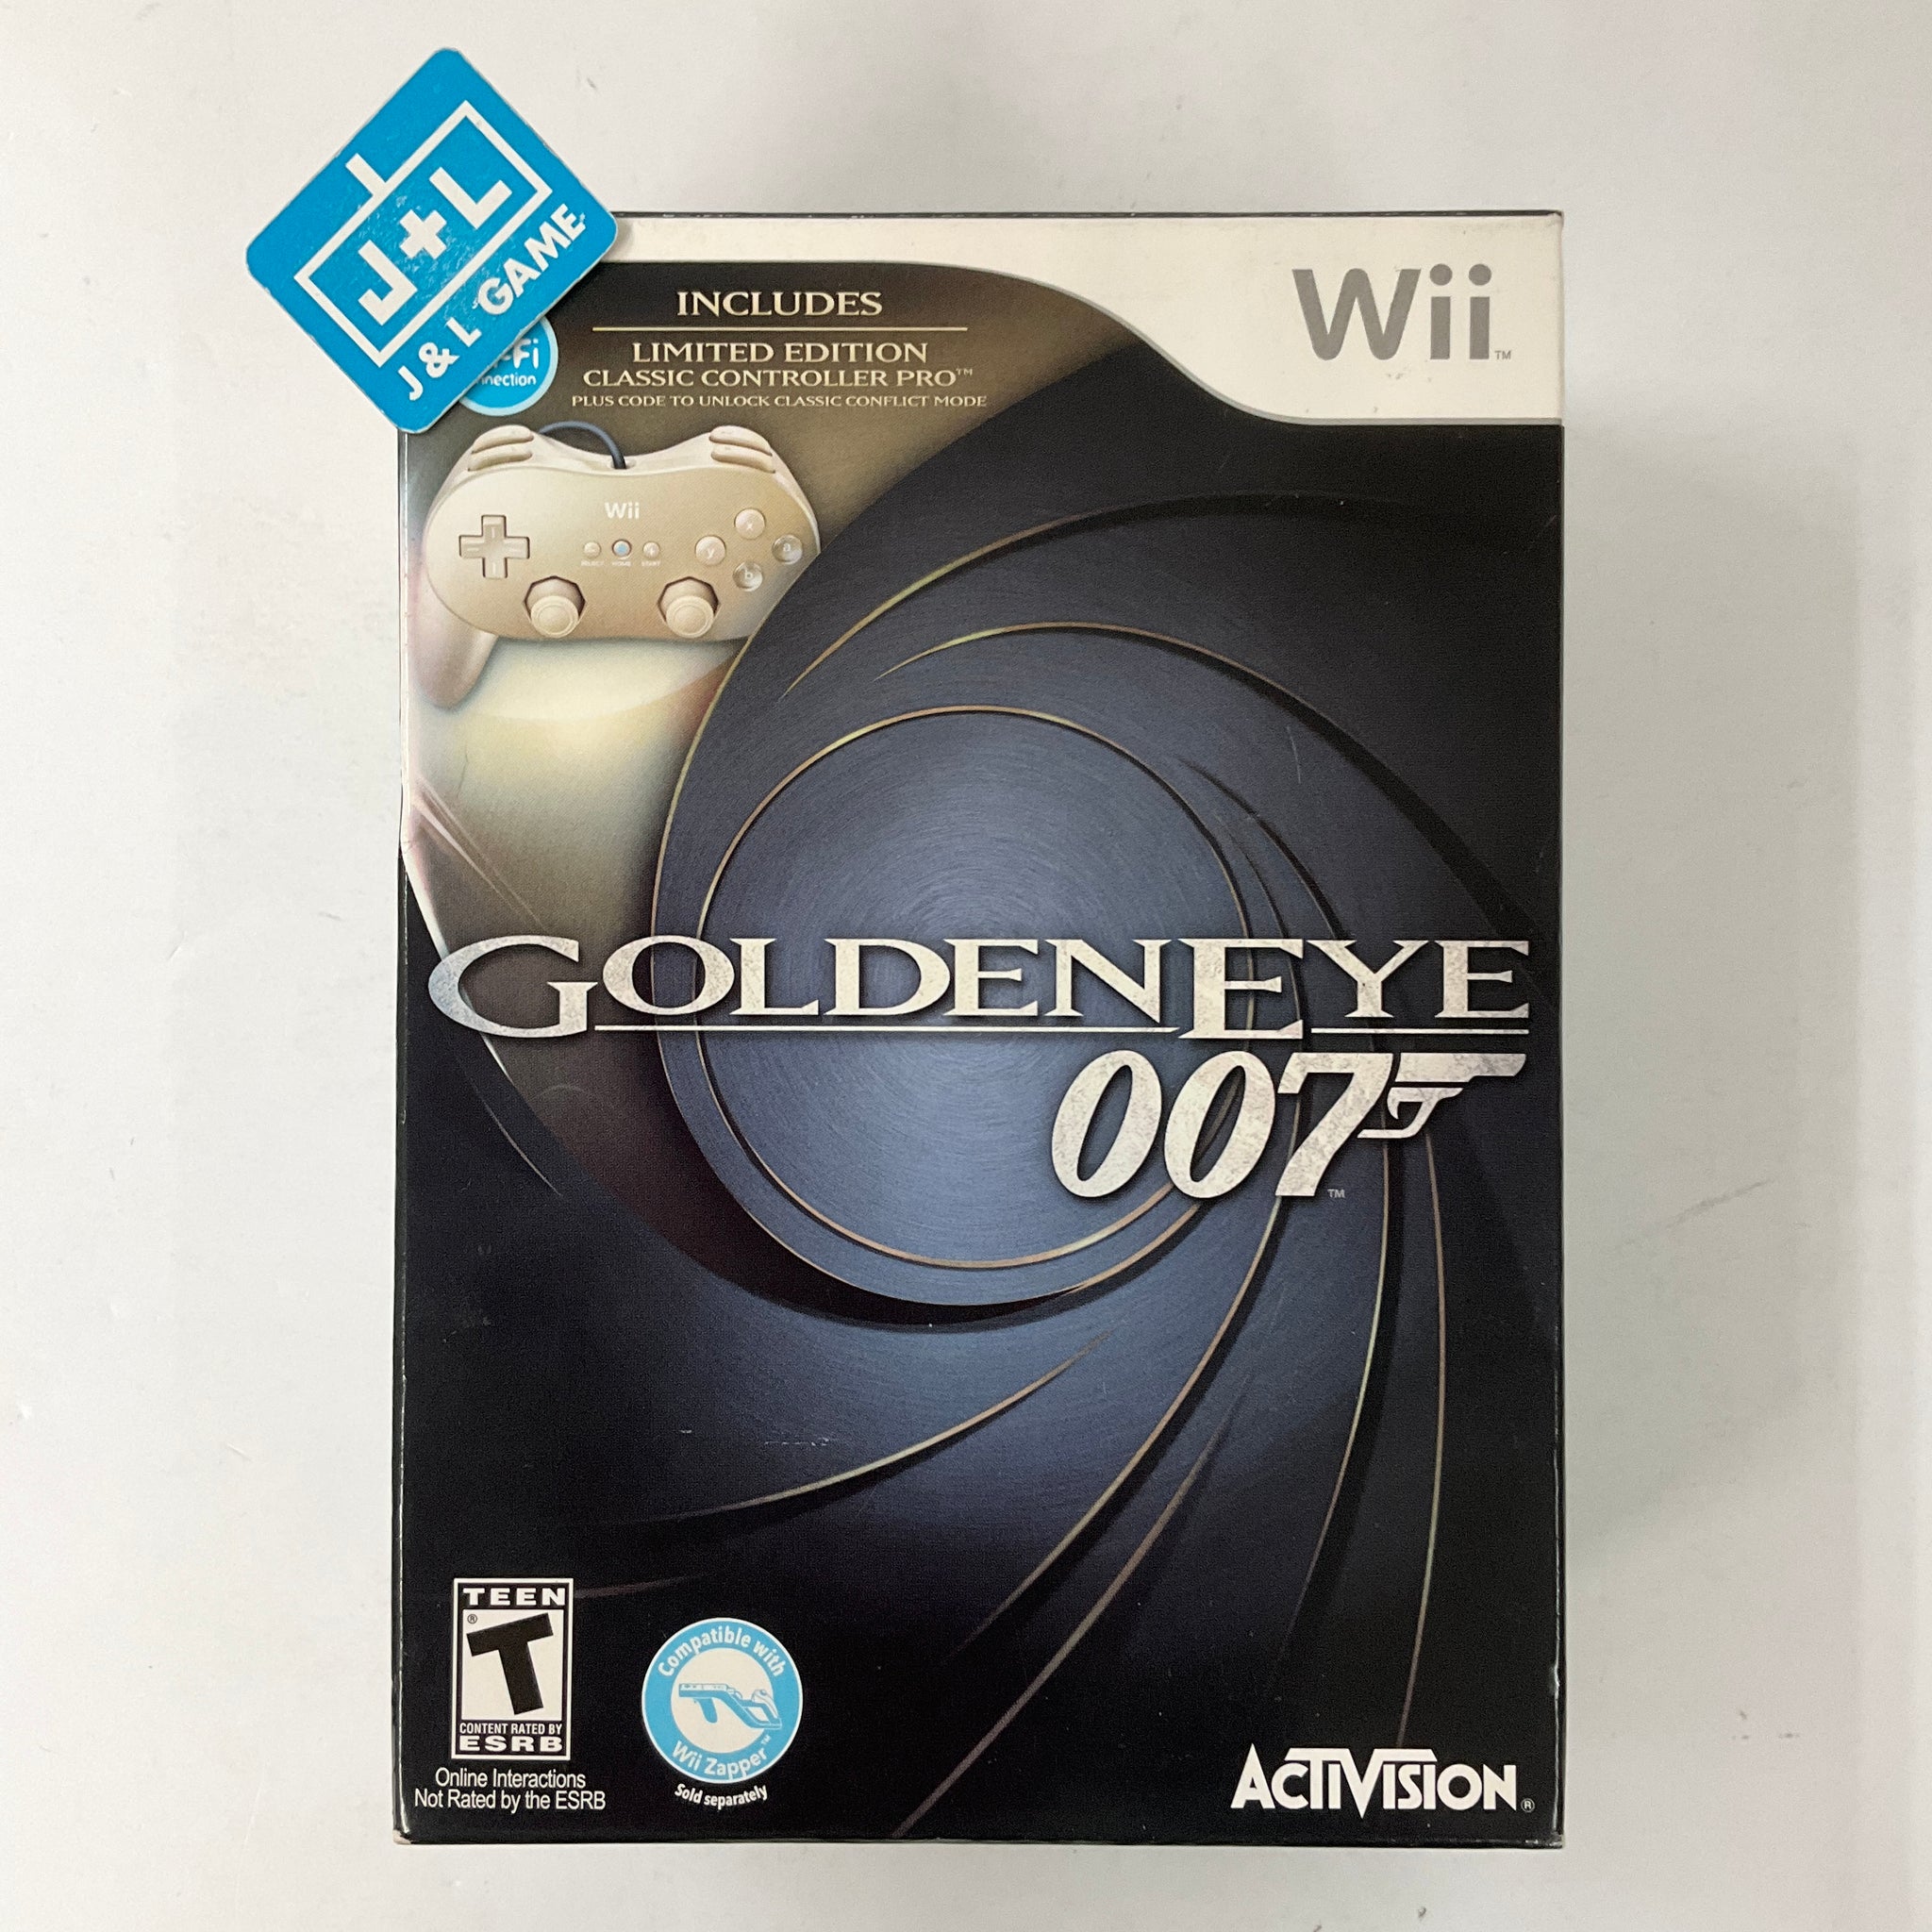 My Work on Goldeneye 007 For Nintendo Wii